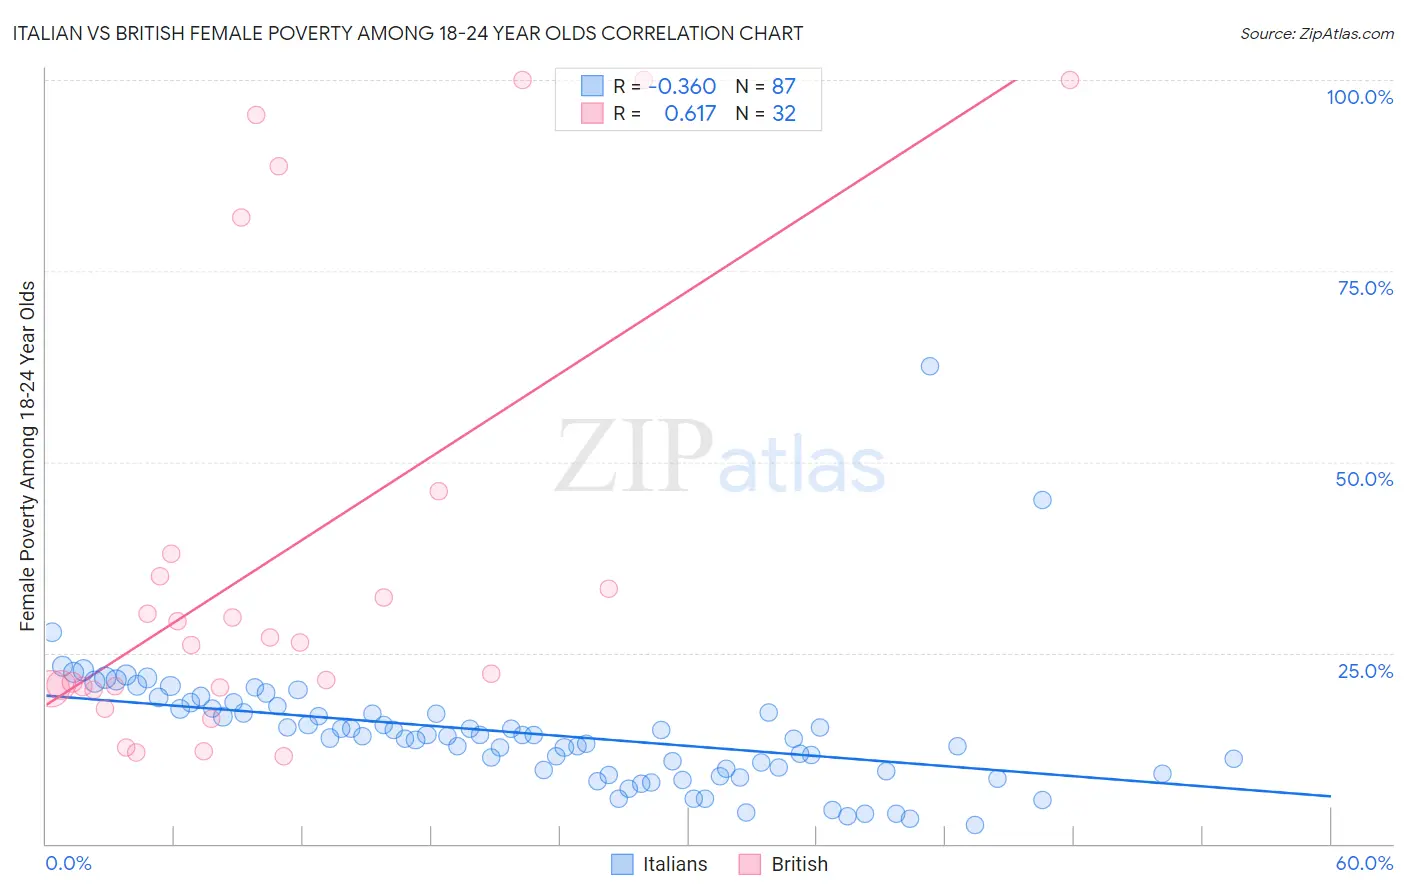 Italian vs British Female Poverty Among 18-24 Year Olds